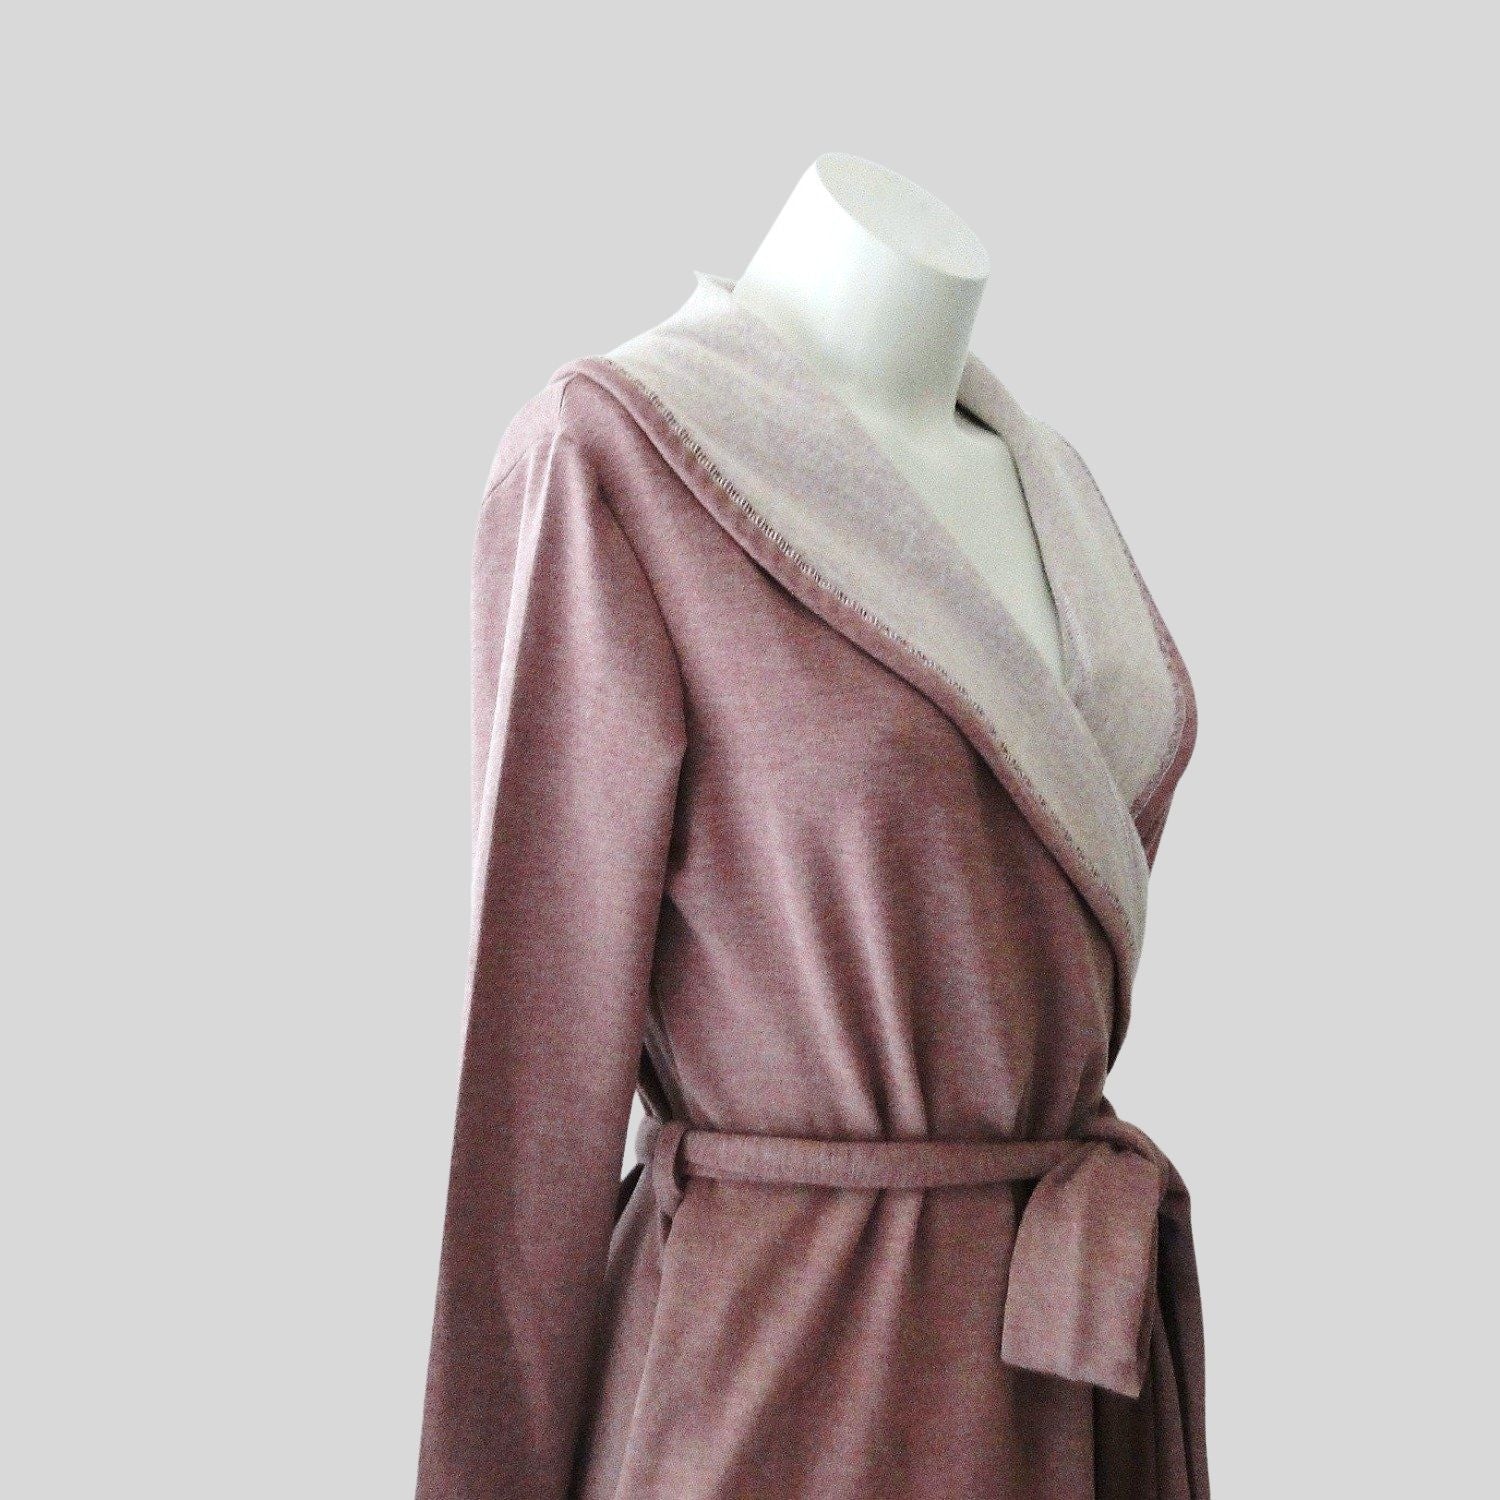 Maxi women's  Organic cotton bathrobe with pockets | Made in Canada sleepwear